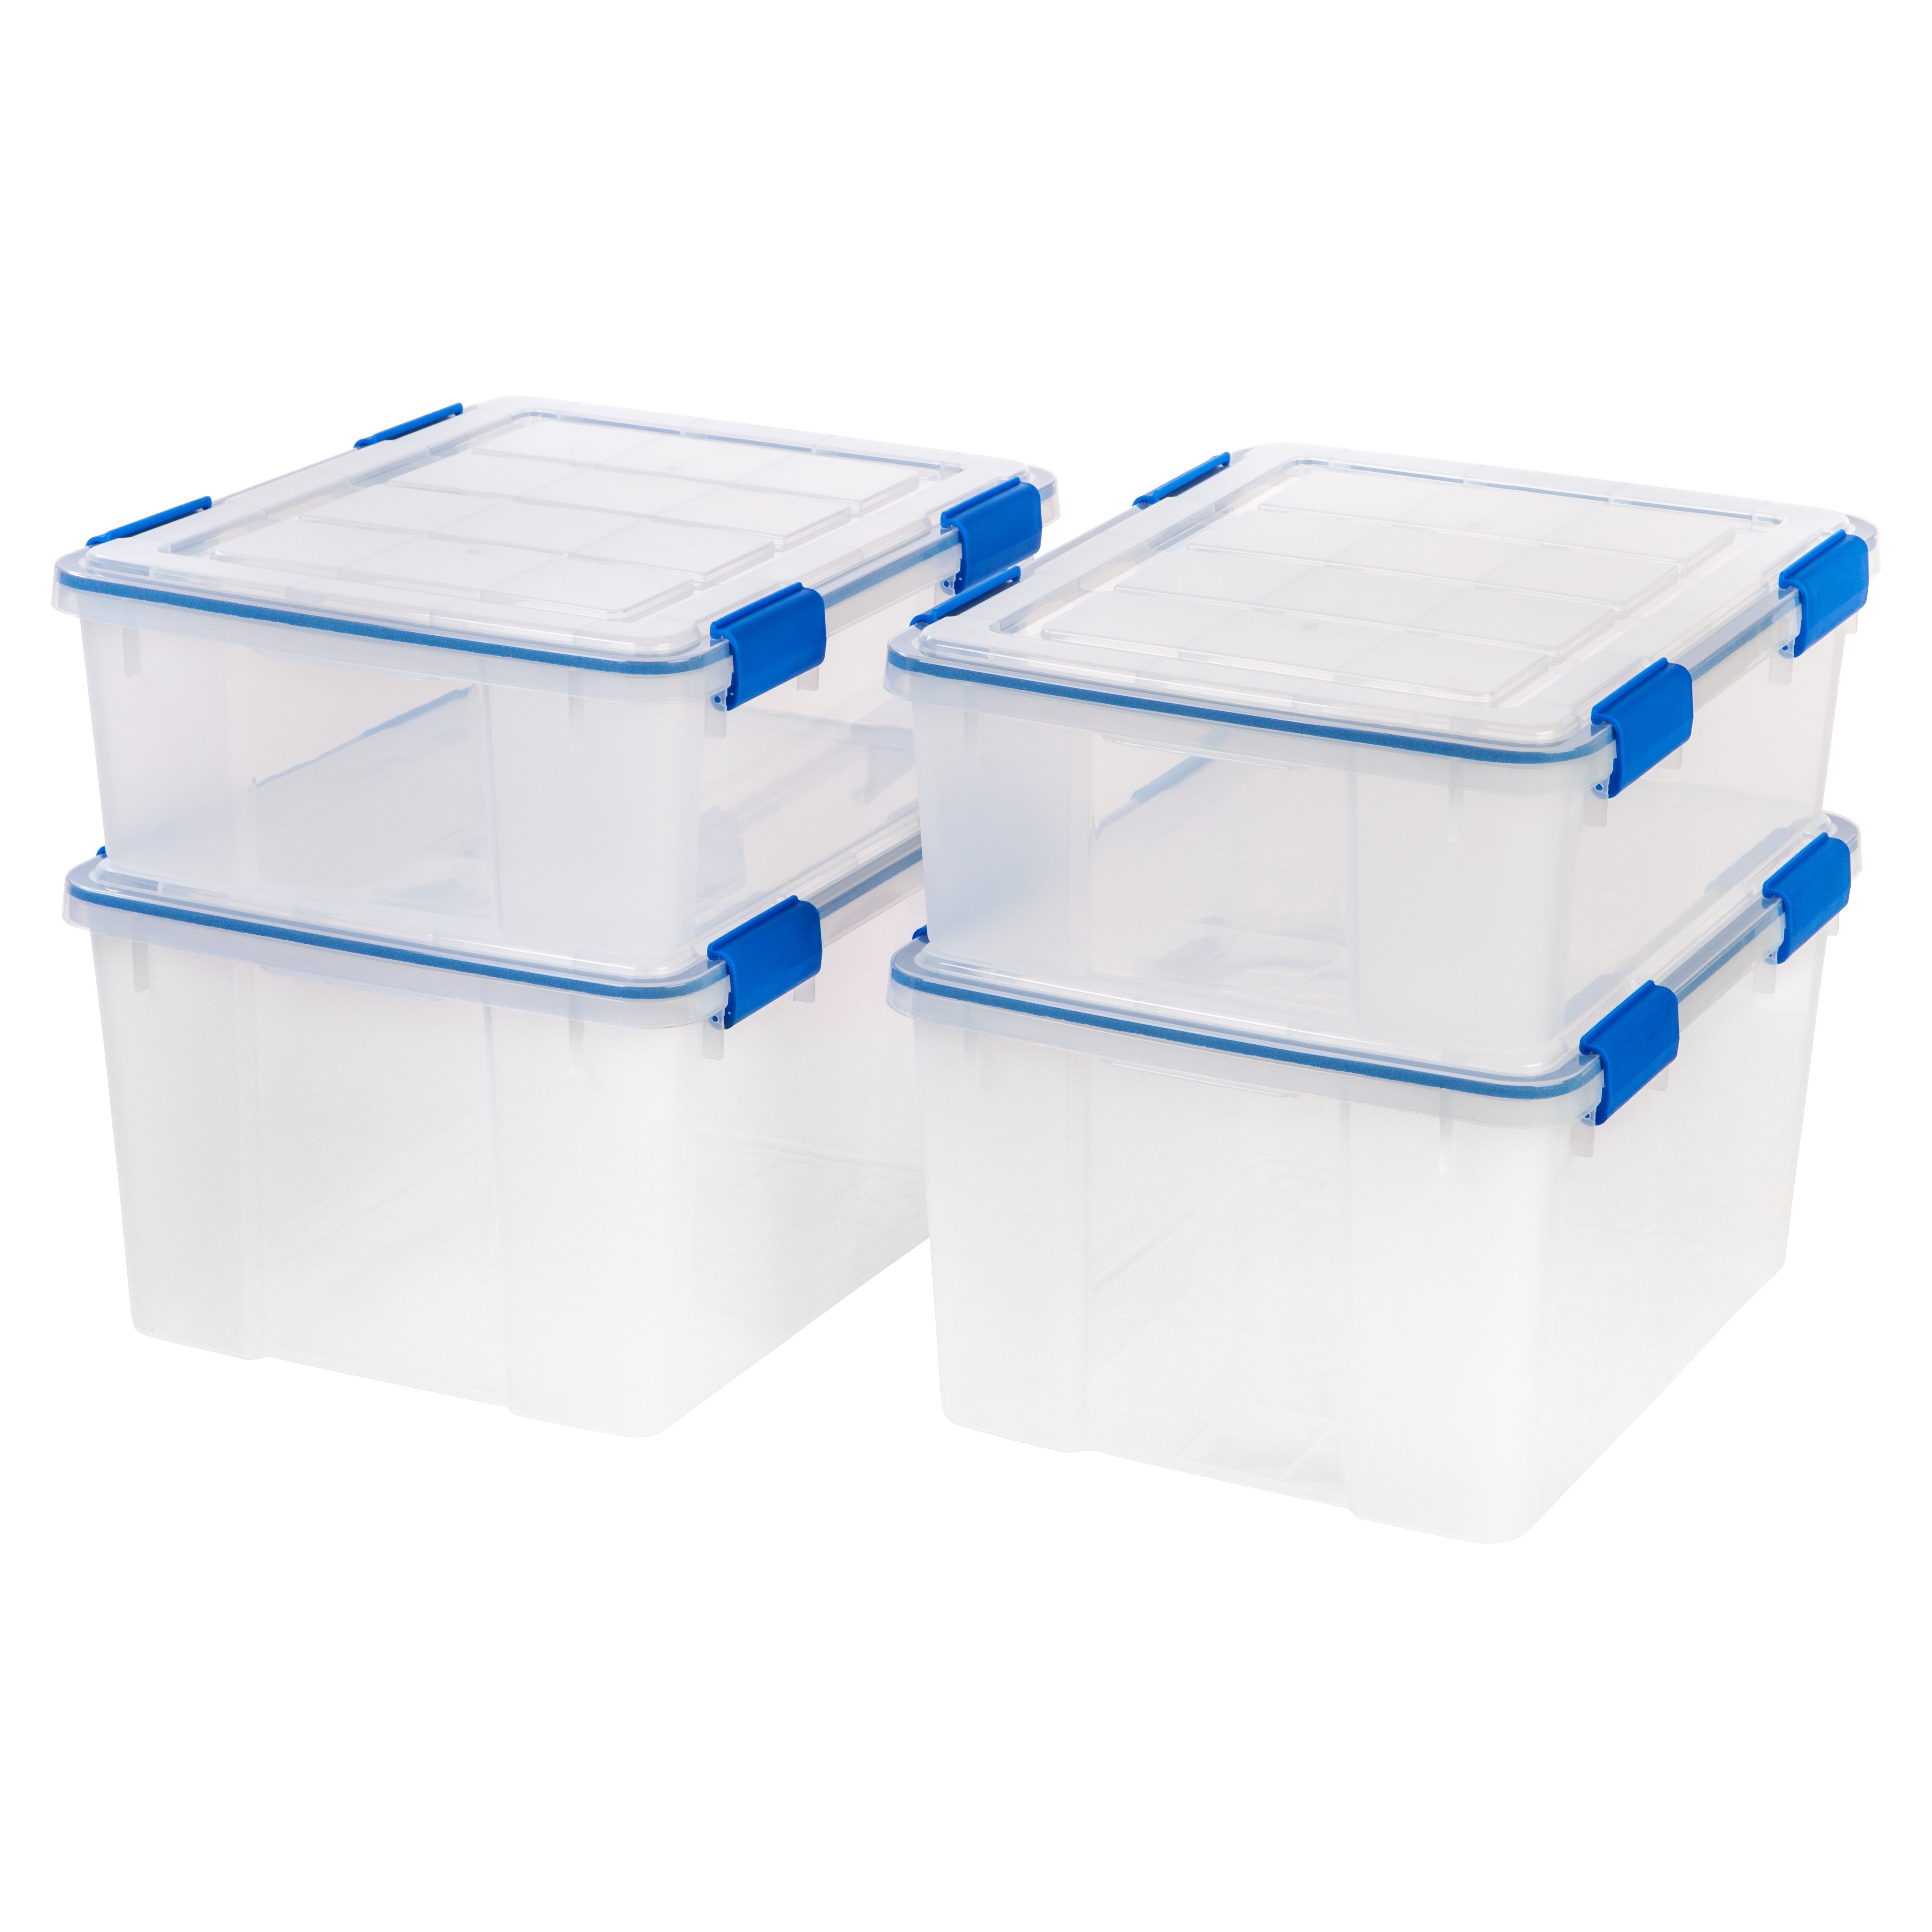 IRIS Weathertight Storage Box, 62 Quart - Clear